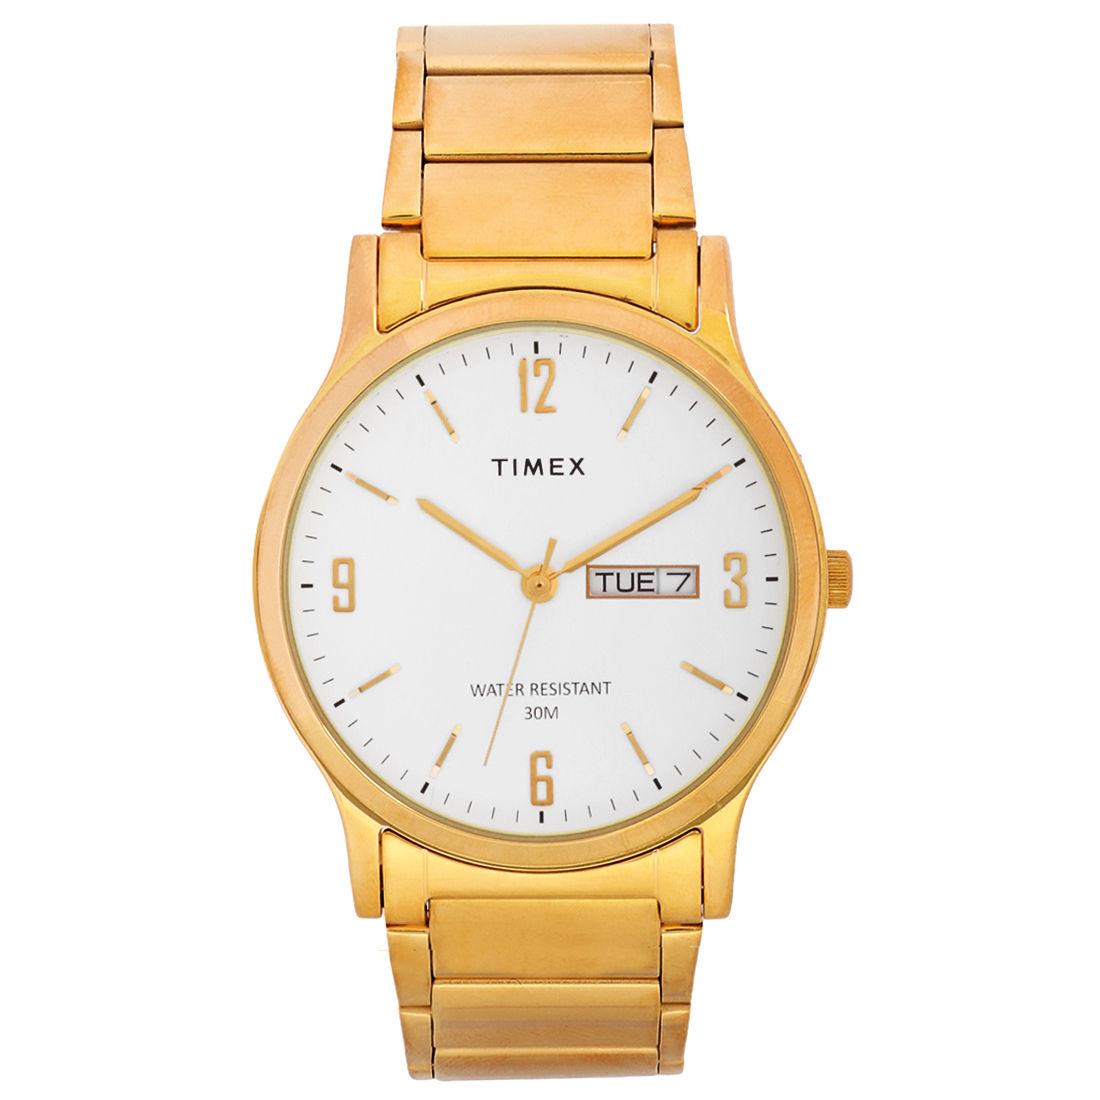 Timex Analog White Dial Men's Watch (TW000R435)